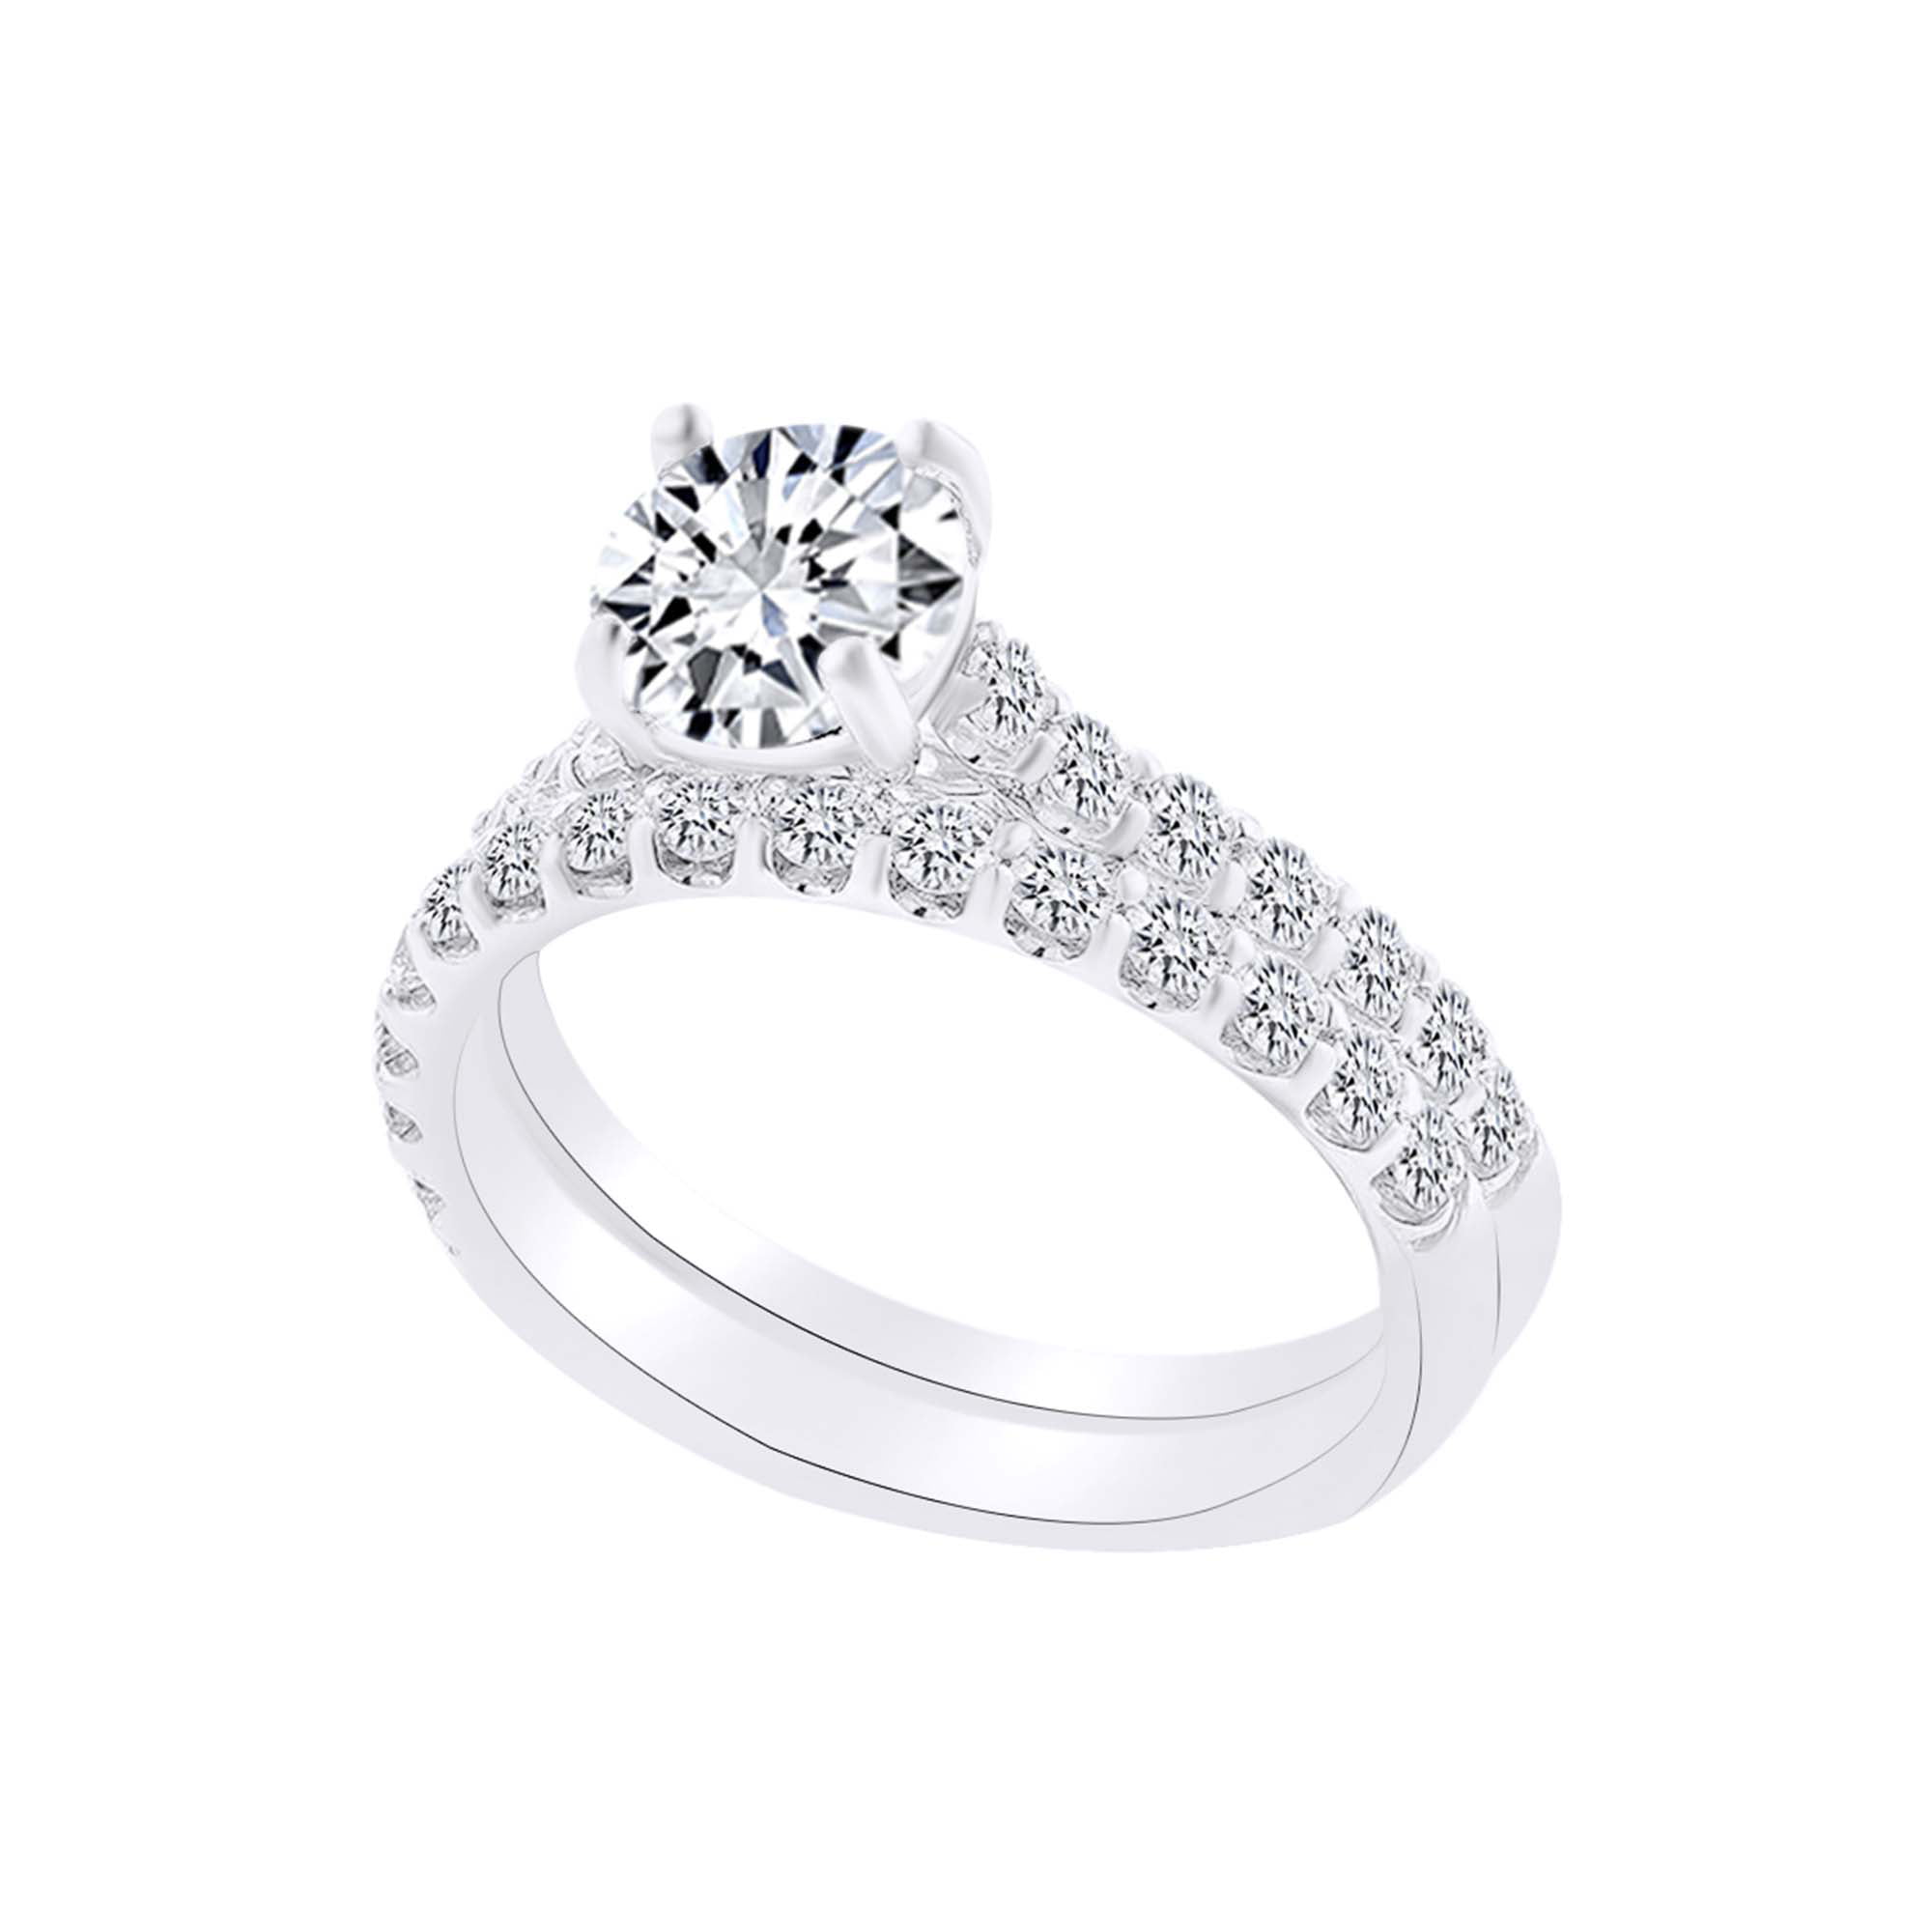 Semi Mount Diamond 6 Prongs Ring 6.5-7mm Round 14K White Gold Engagement Wedding 